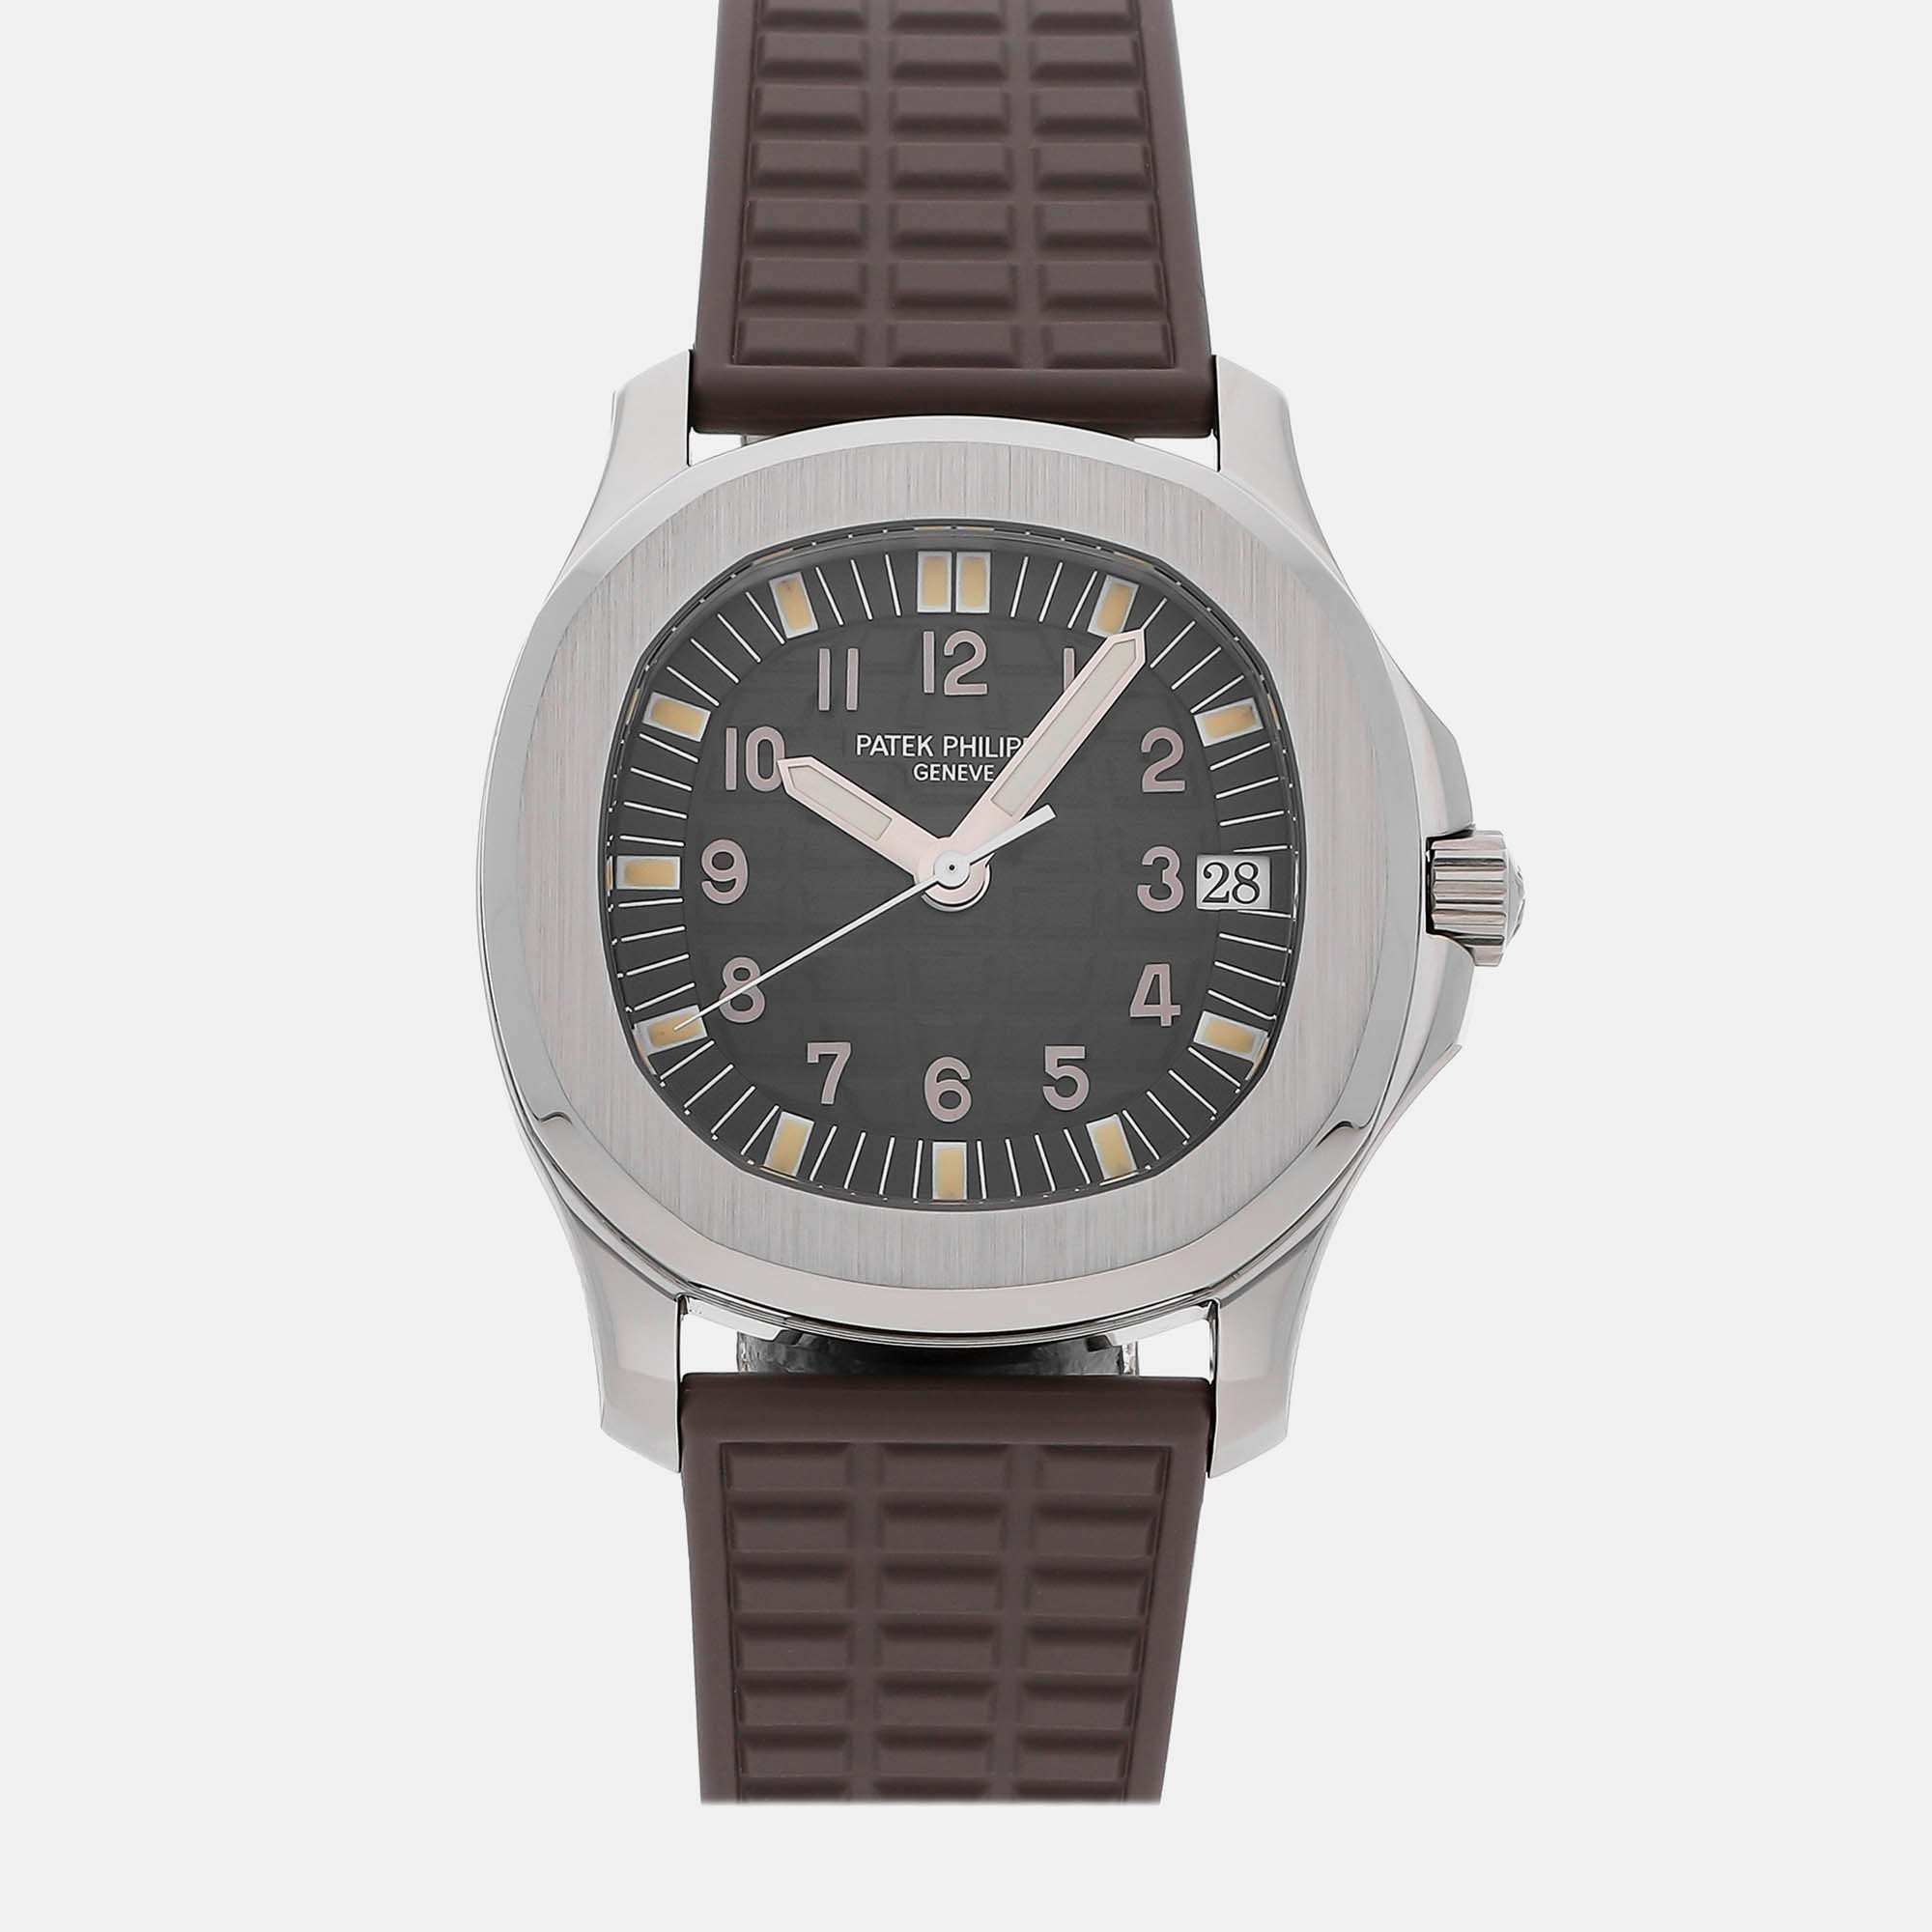 Patek philippe black stainless steel aquanaut 5060a-001 automatic men's wristwatch 35 mm